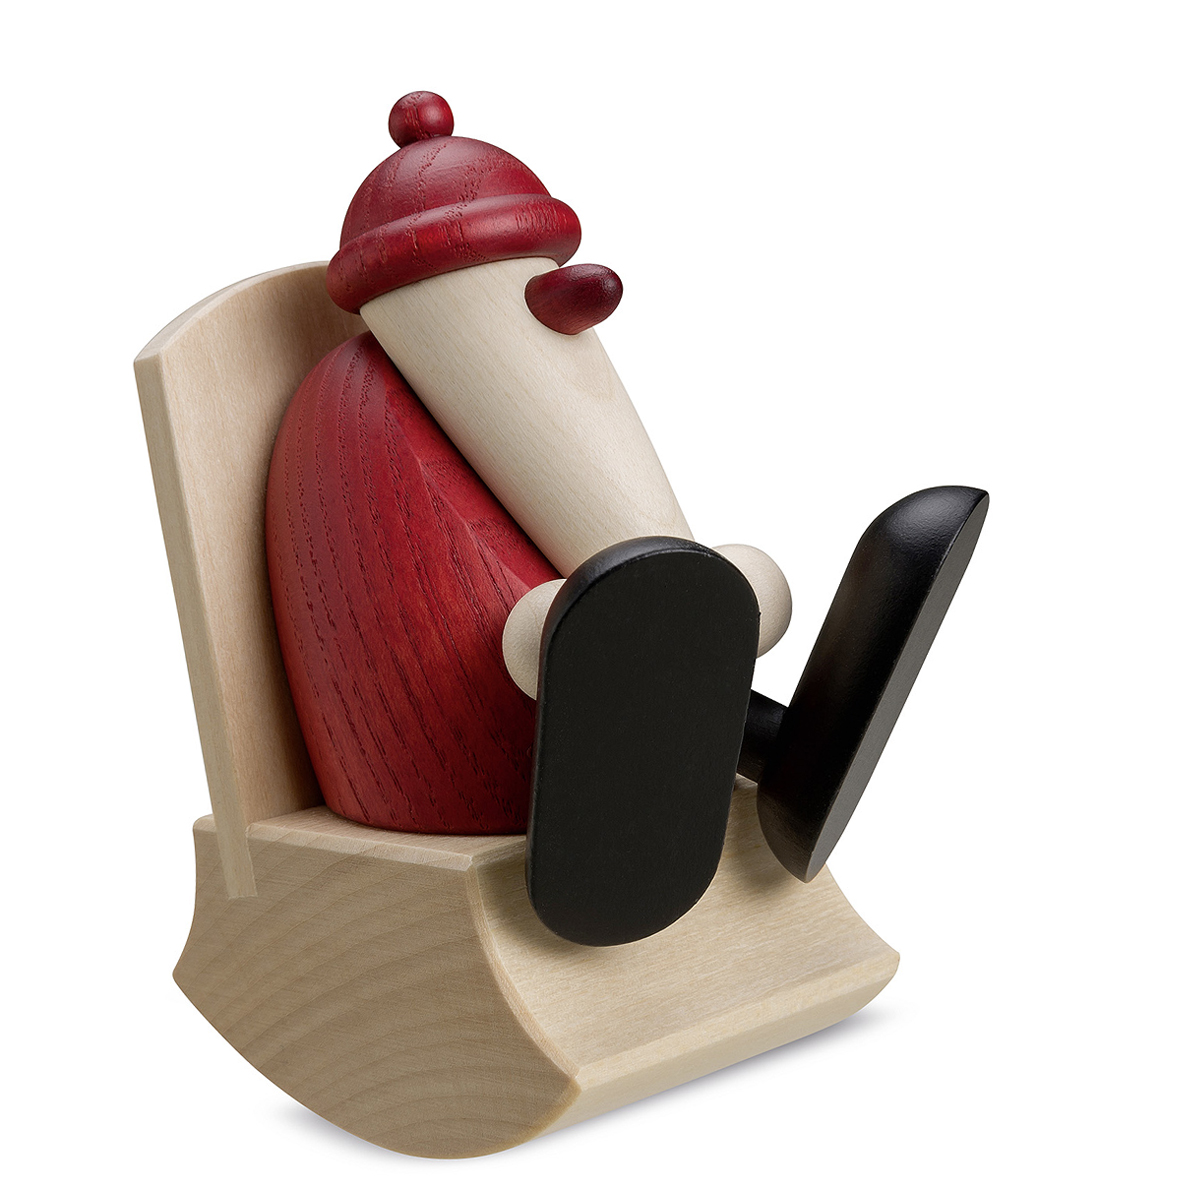 Santa Claus in a rocking chair, small